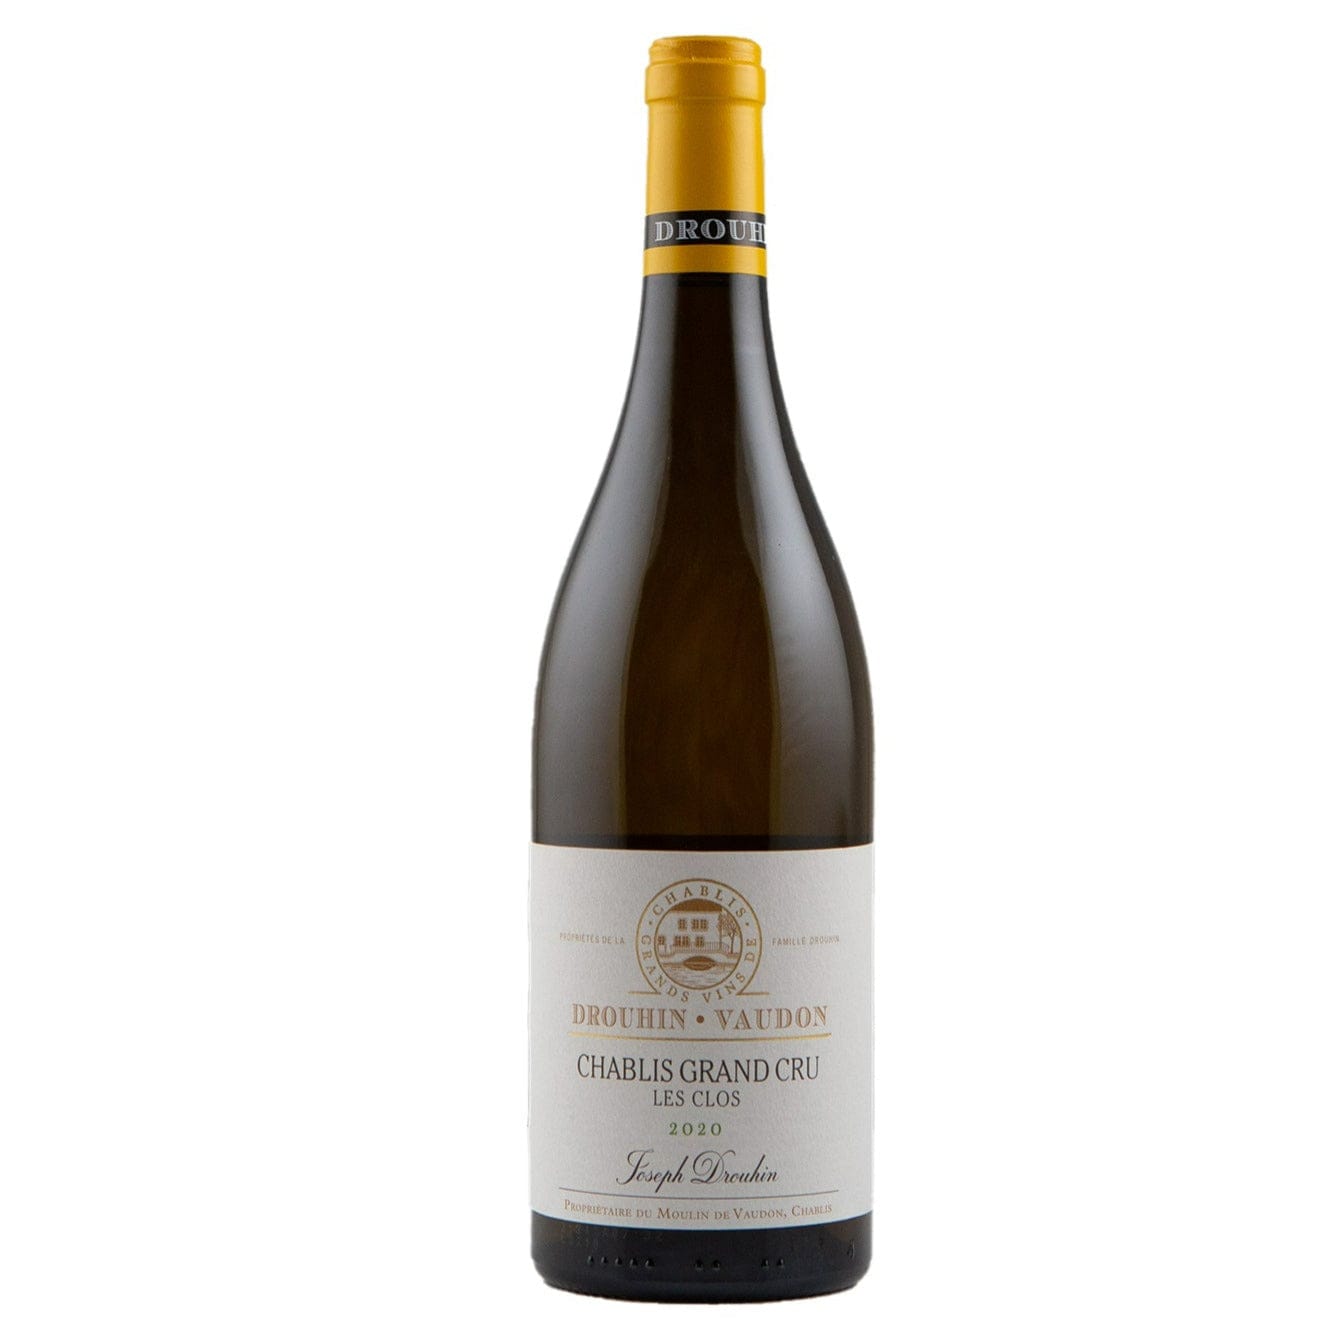 Single bottle of White wine Drouhin-Vaudon, Les Clos Grand Cru, Chablis, 2020 100% Chardonnay